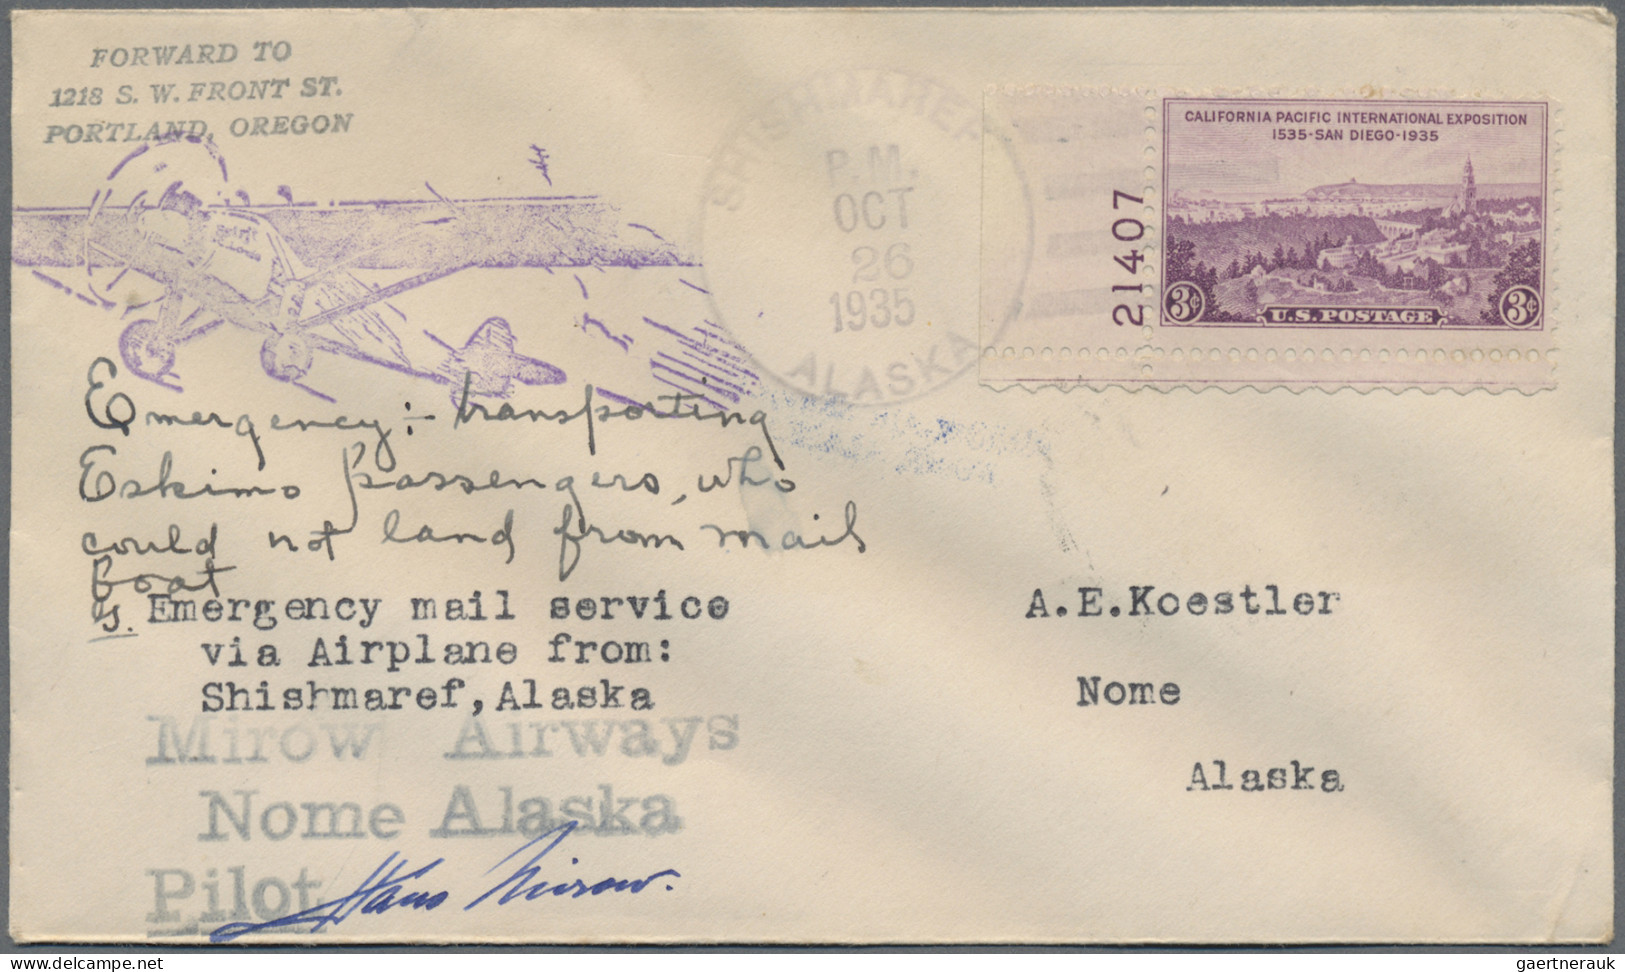 United States of America - post marks: 1900/1956, ALASKA, assortment of apprx. 1